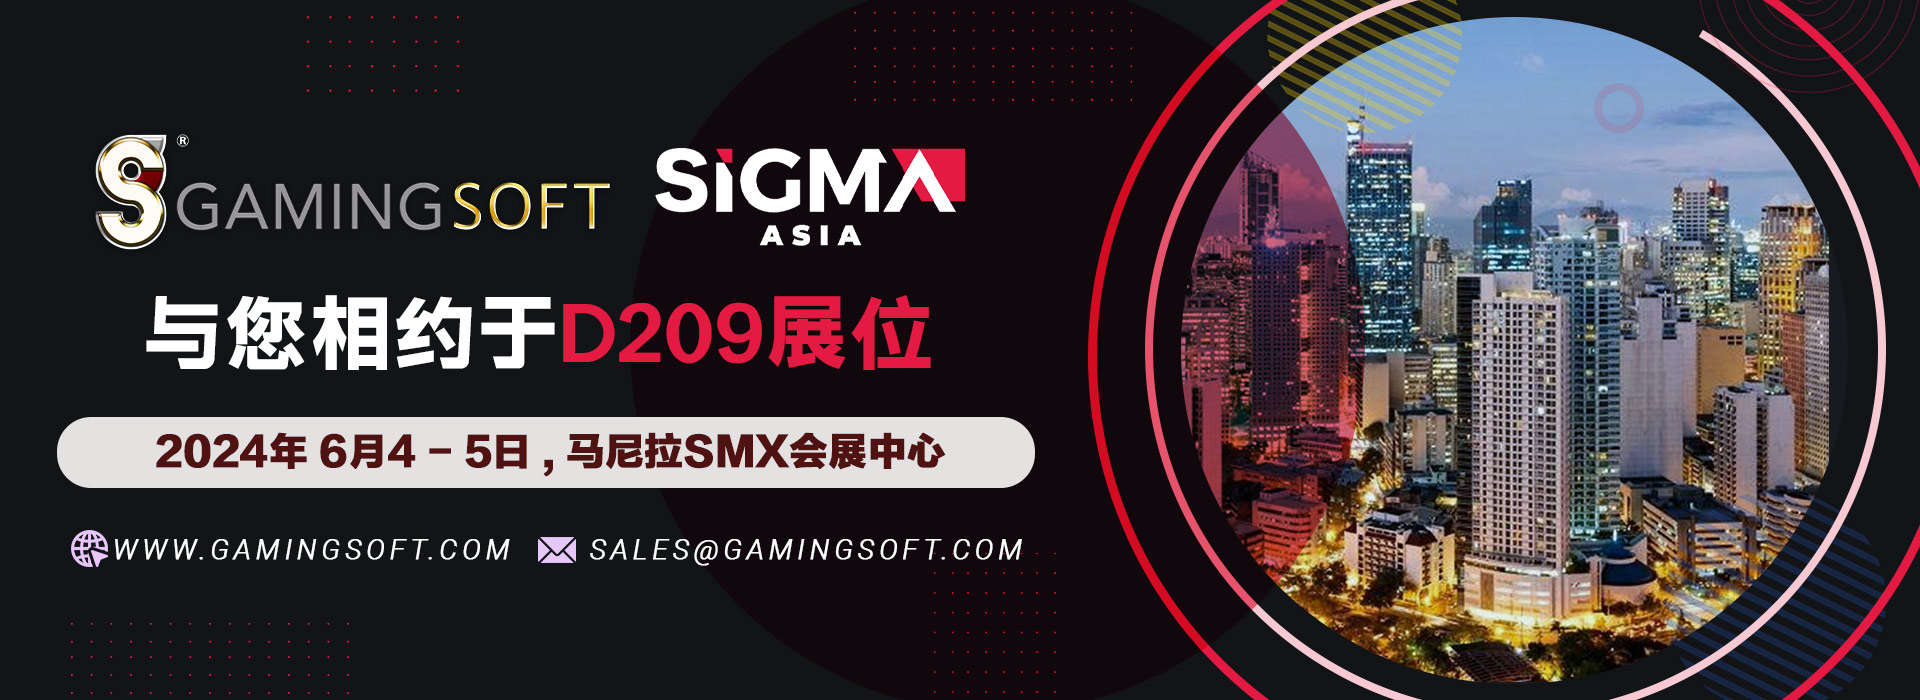 Sigma Asia 2024 与你相约于 D209 展位 网页横幅 - 乐游国际GamingSoft